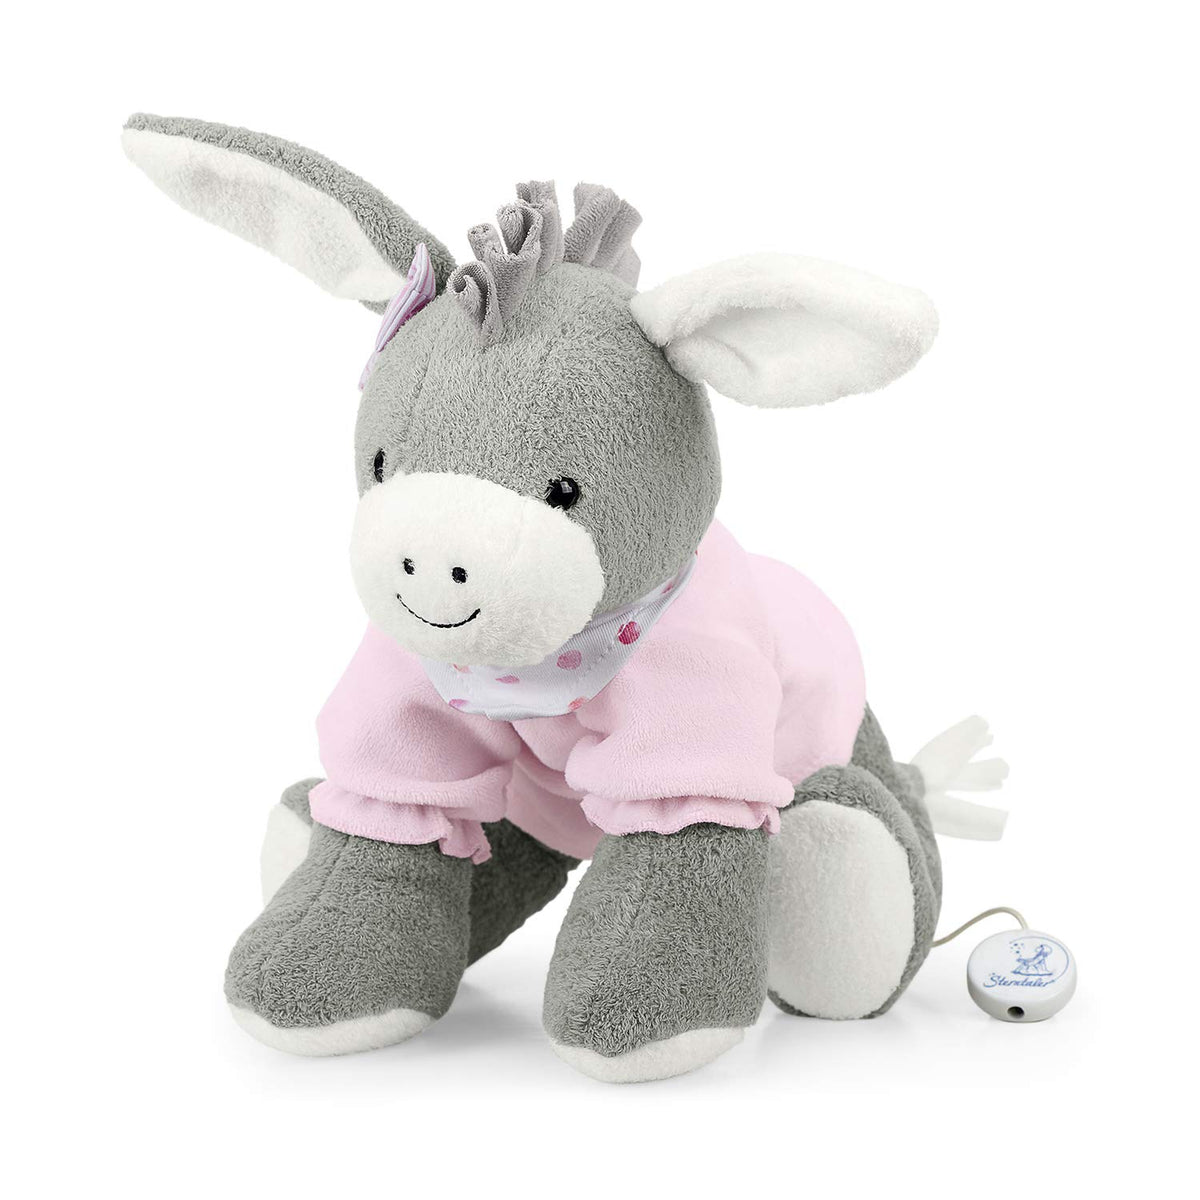 Sterntaler Musical Toy, Plush Donkey Emmi, Interchangeable Music Box, Size: L, Grey/Pink